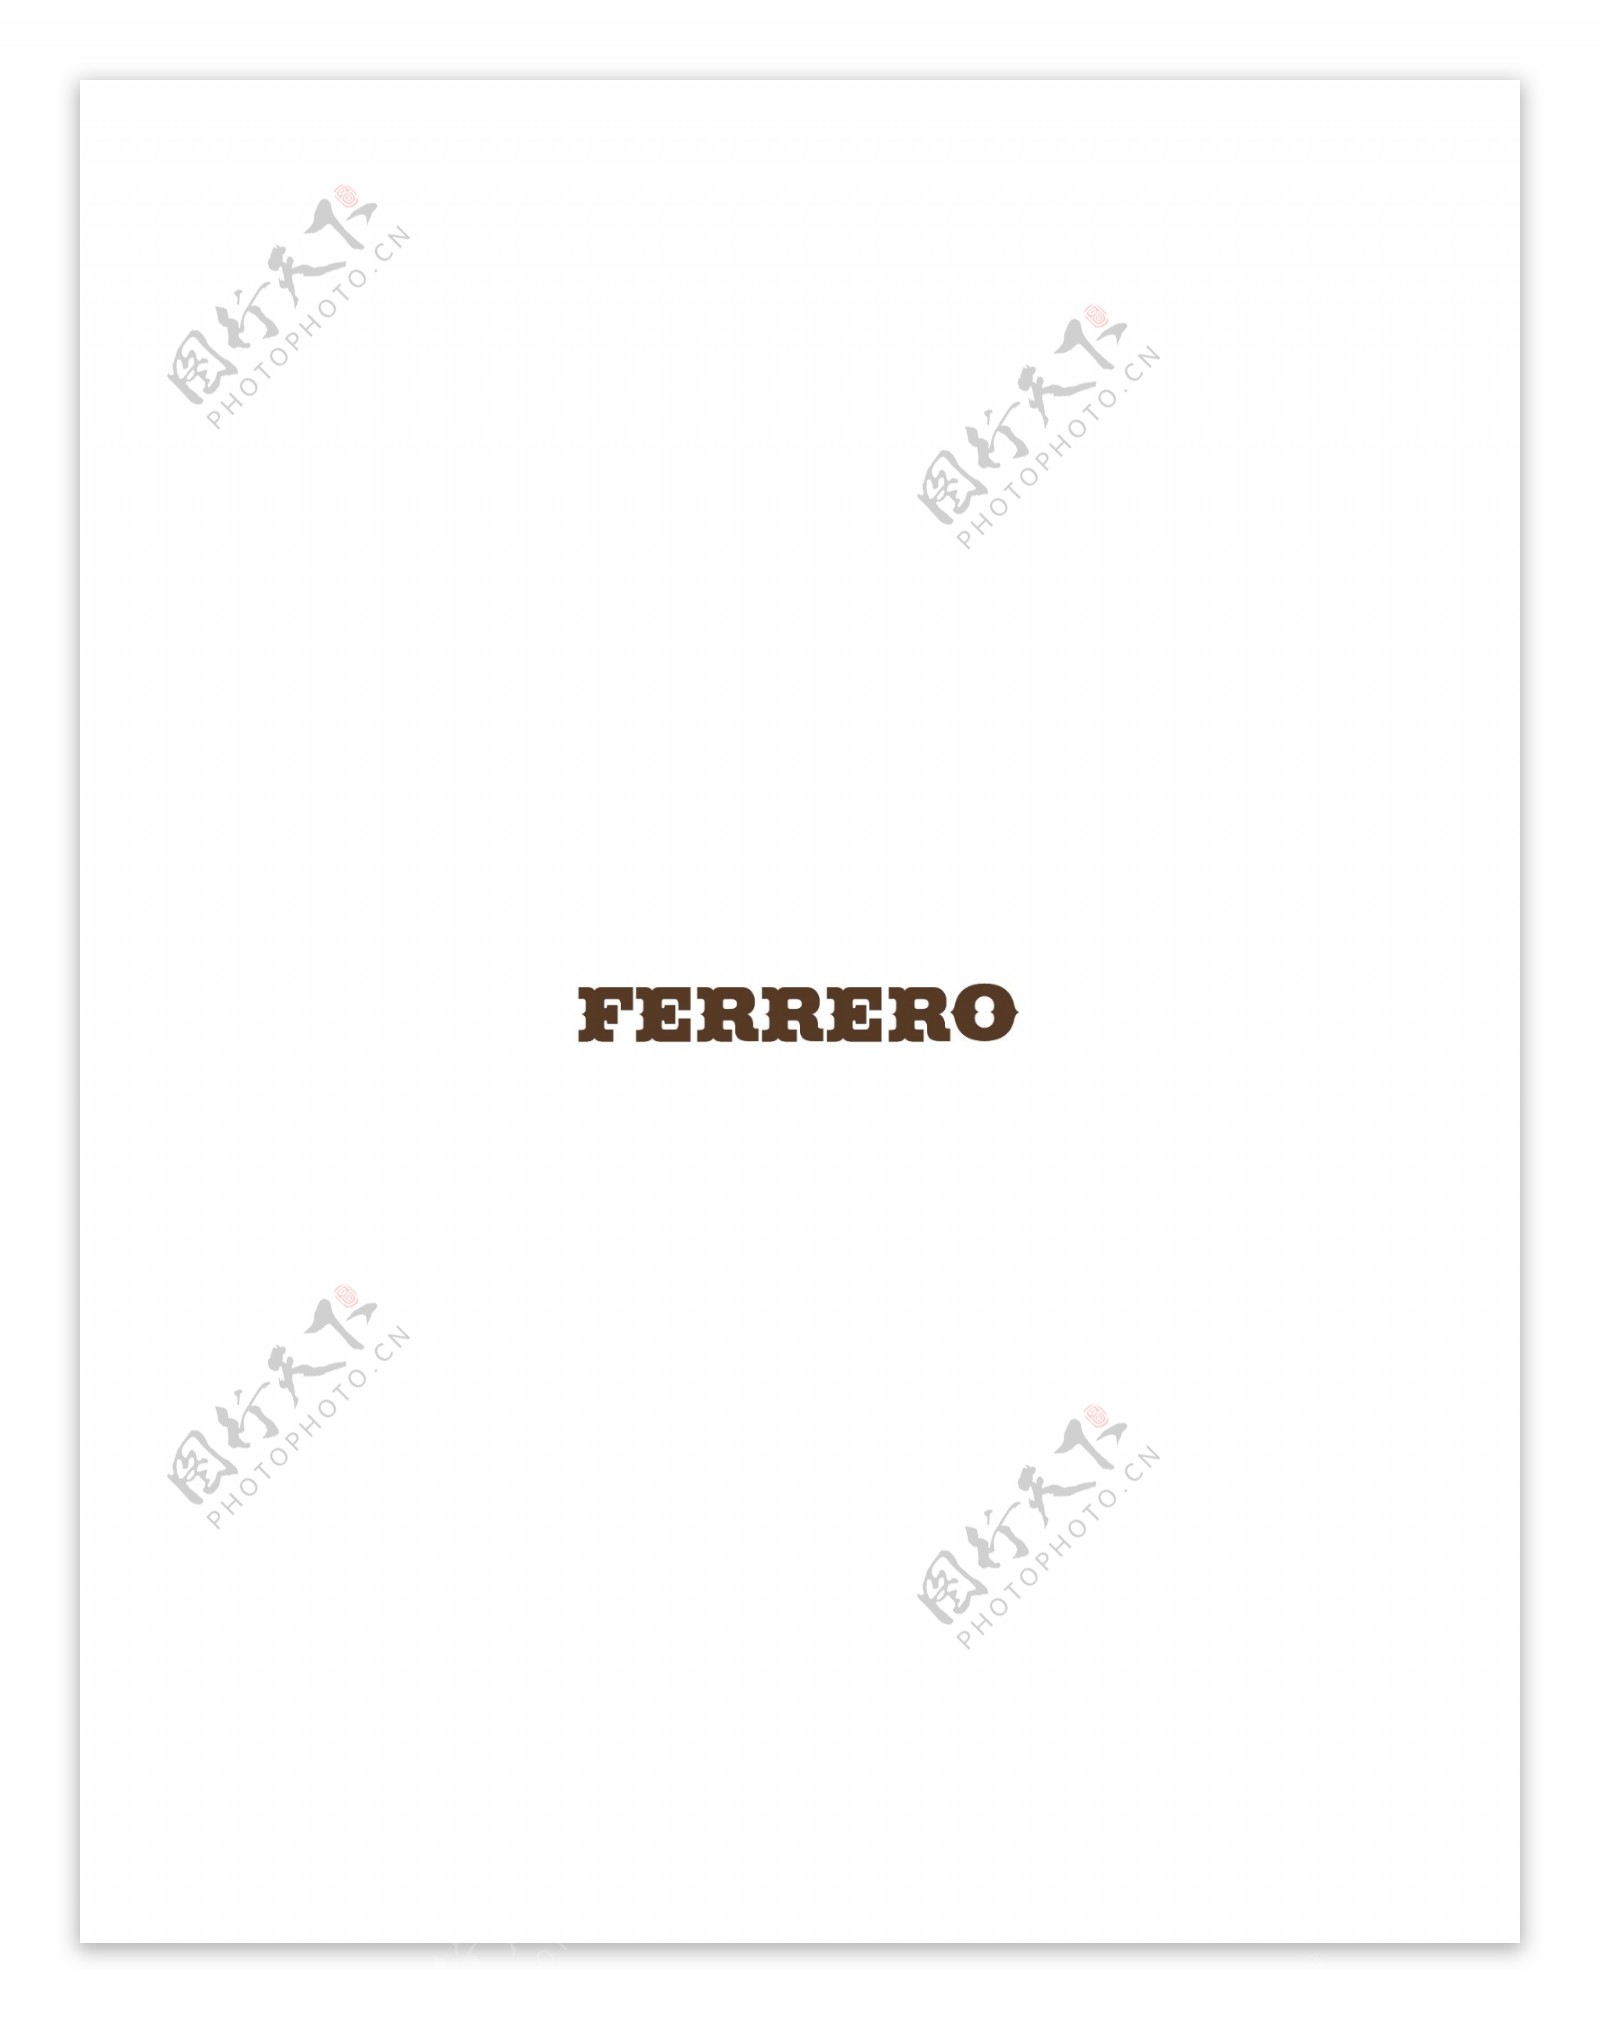 Ferrerologo设计欣赏足球和IT公司标志Ferrero下载标志设计欣赏